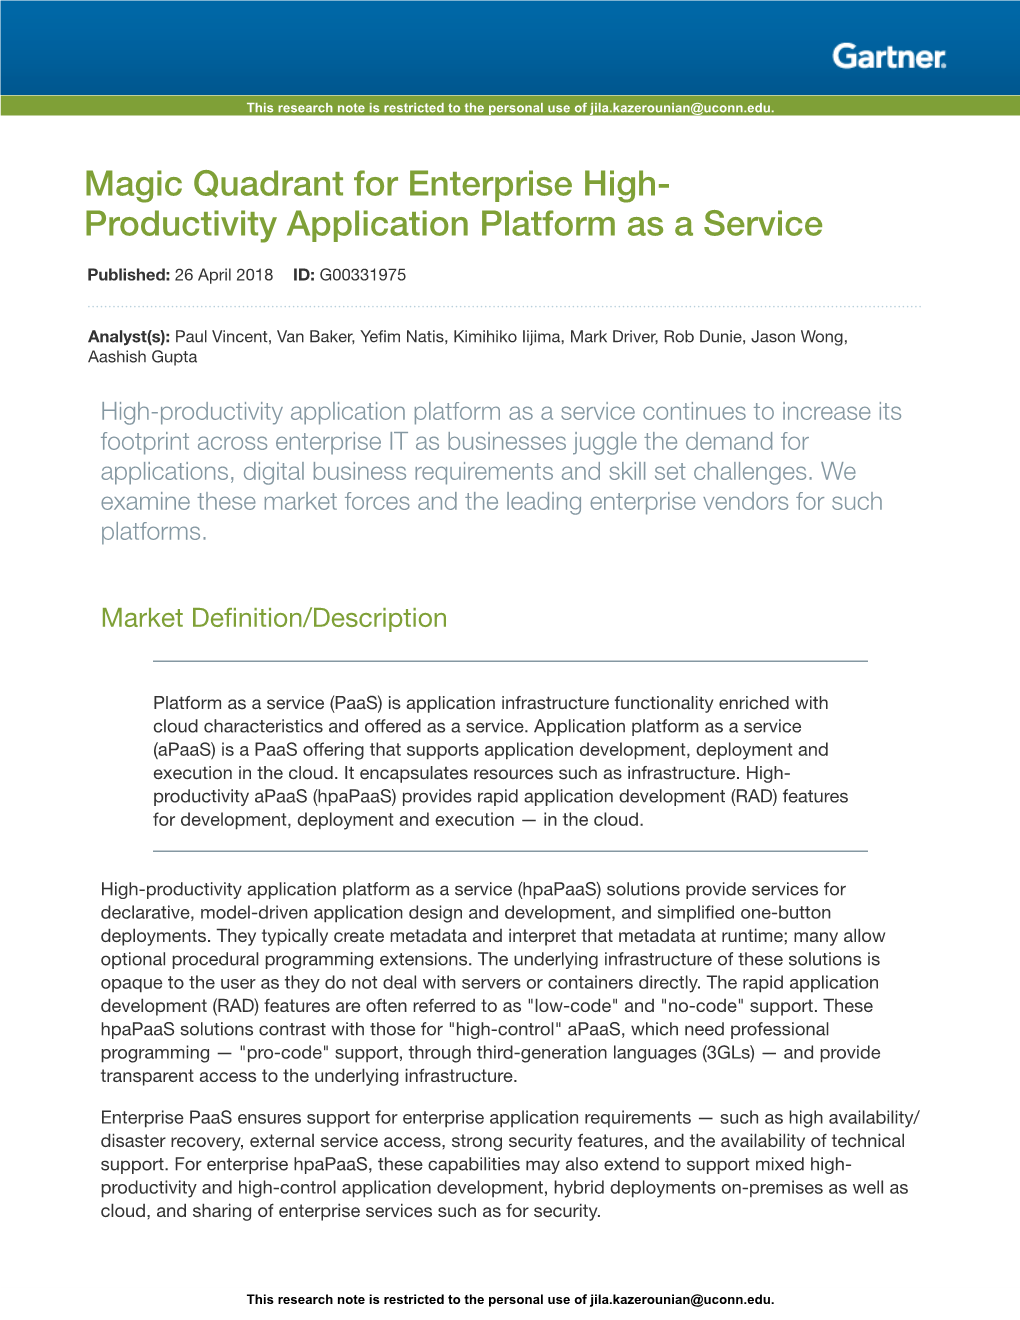 Magic Quadrant for Enterprise High-Productivity Application Platform As a Service